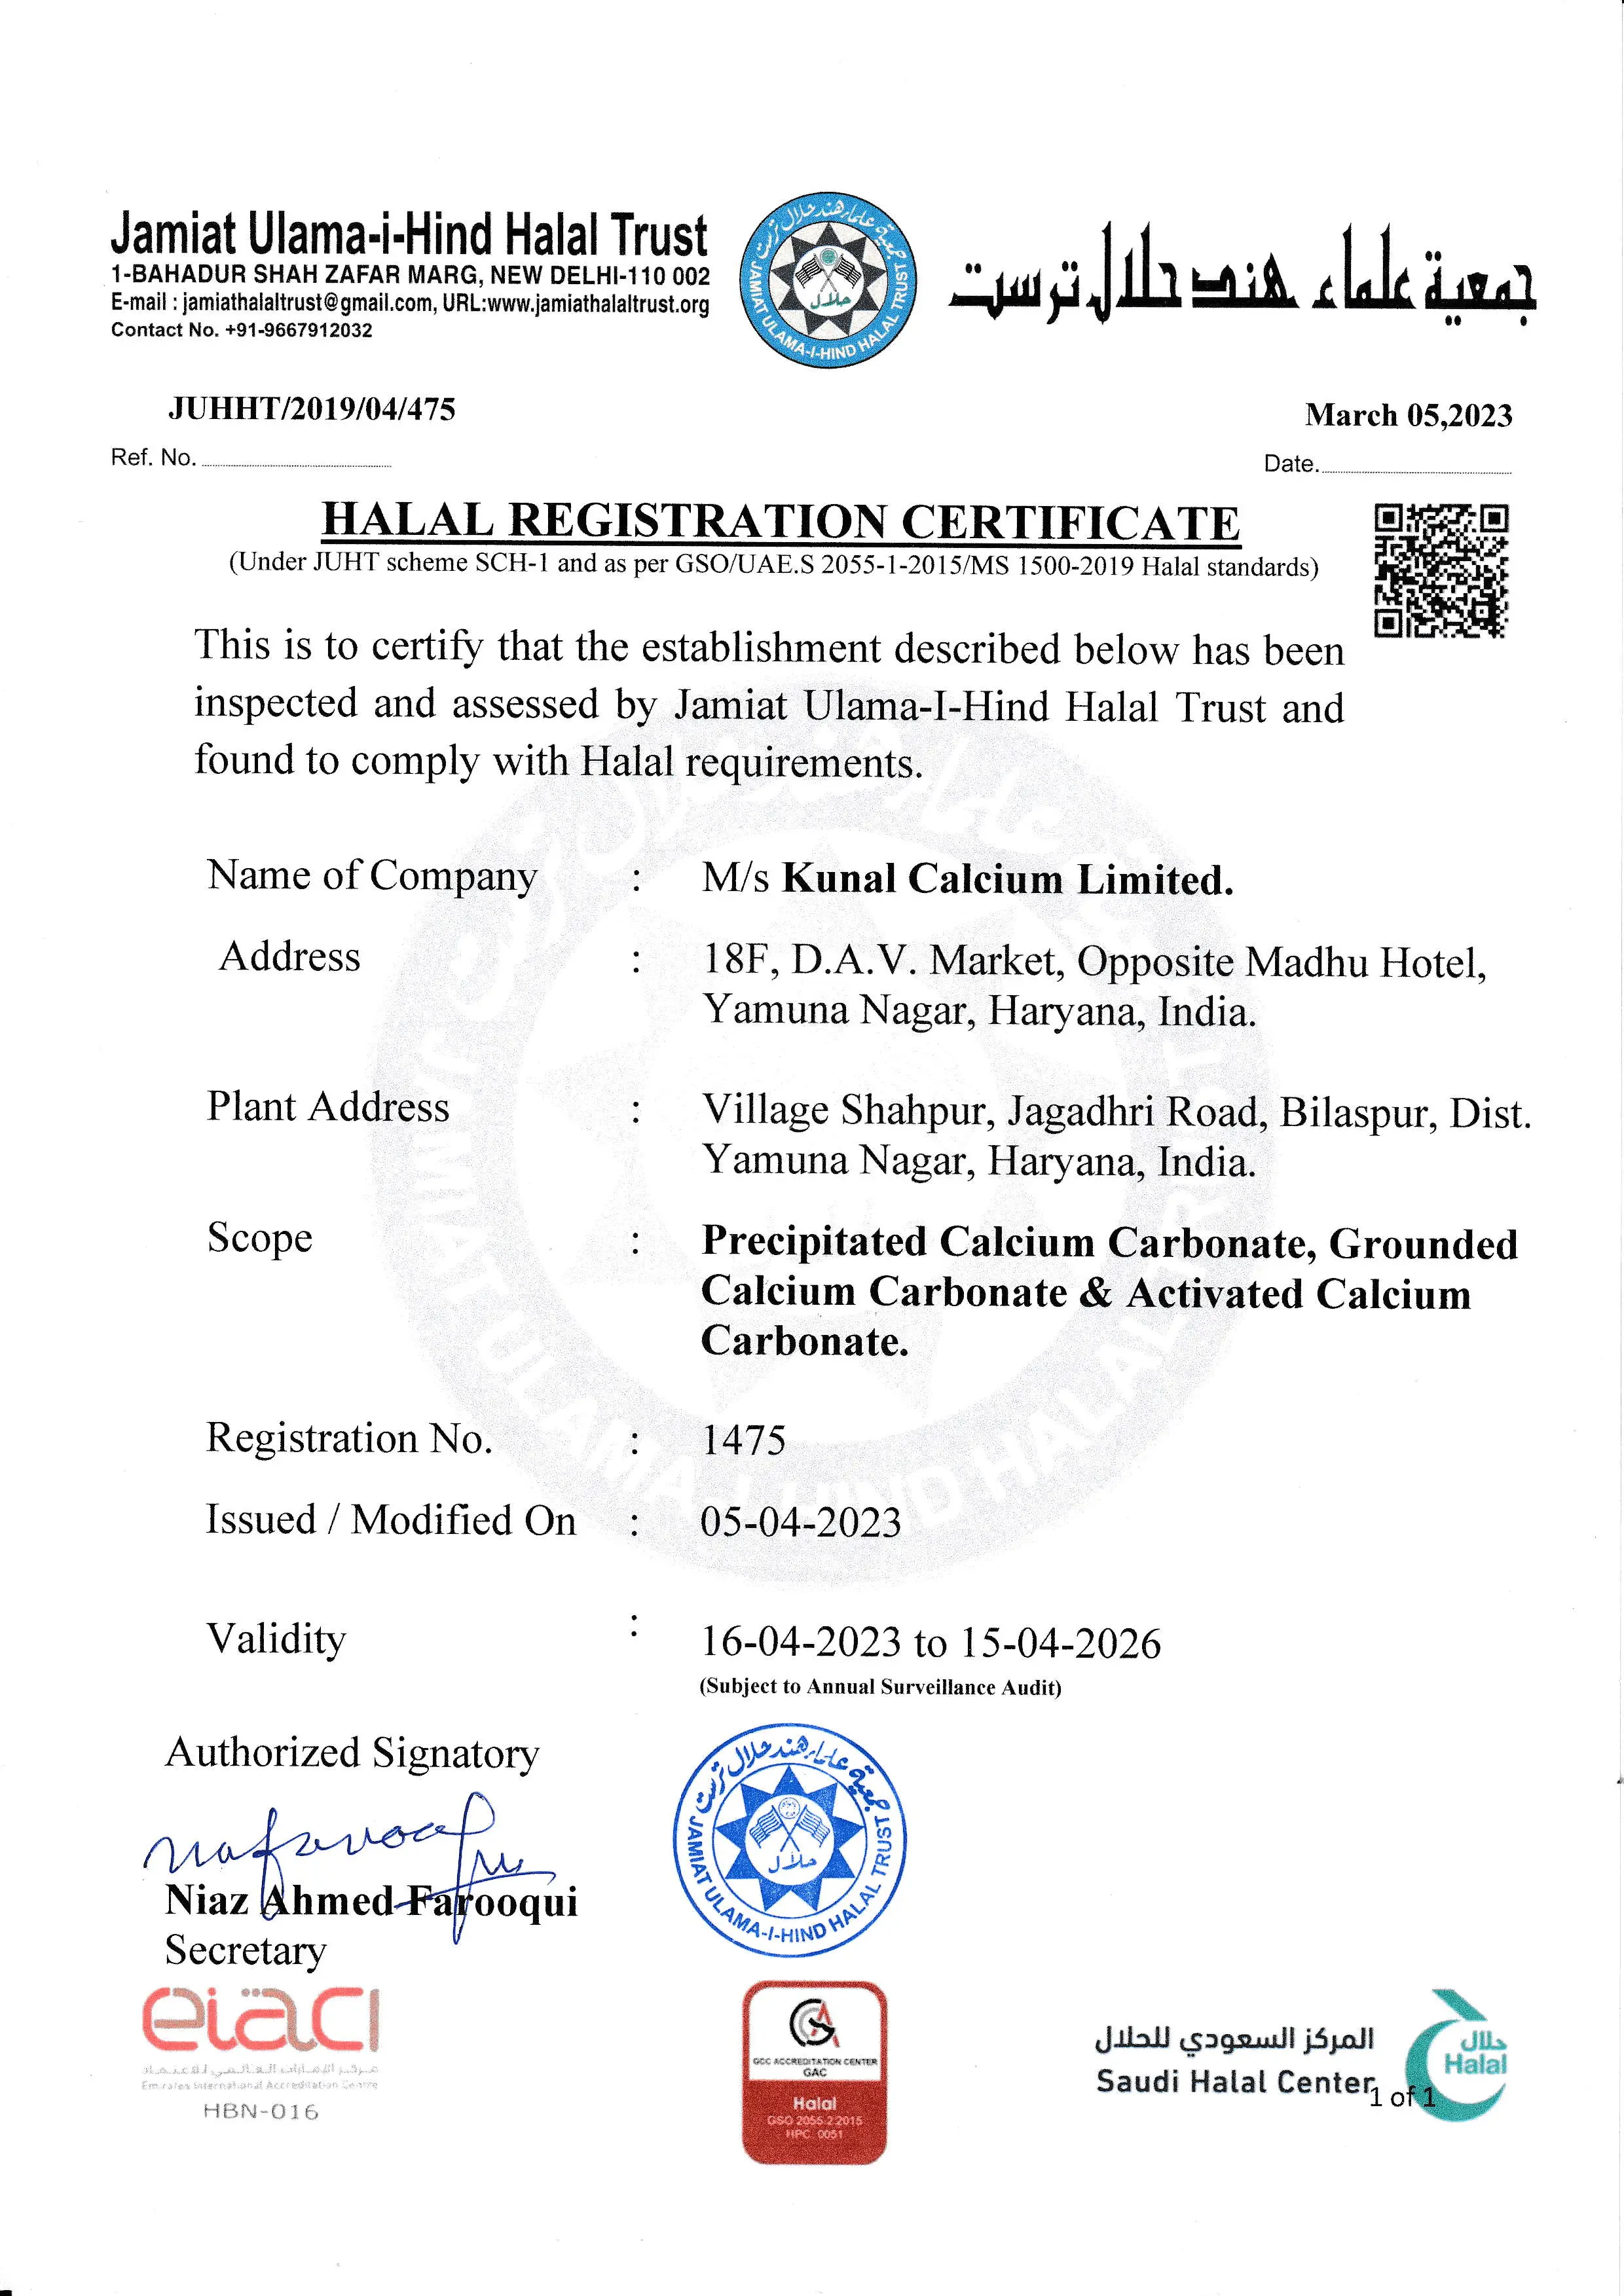 Kunal Calcium Halal Certificate 2023